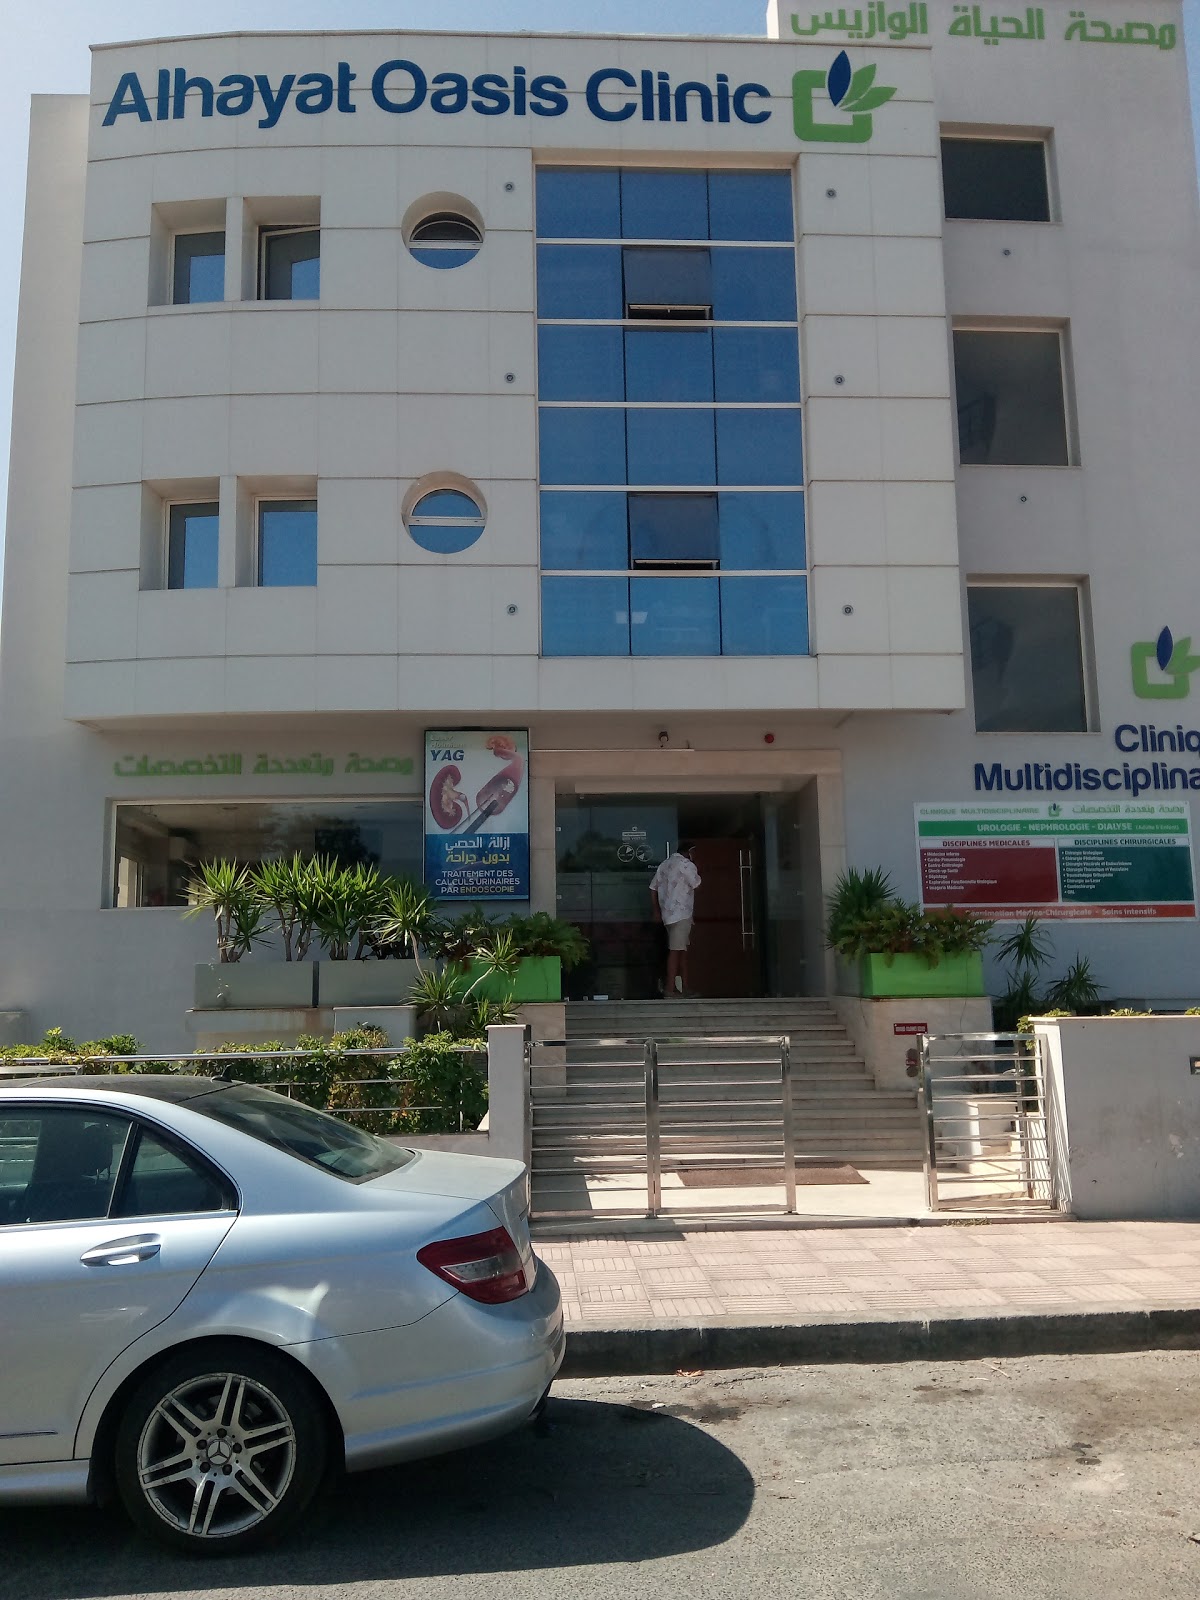 Al Hayat Oasis Clinic